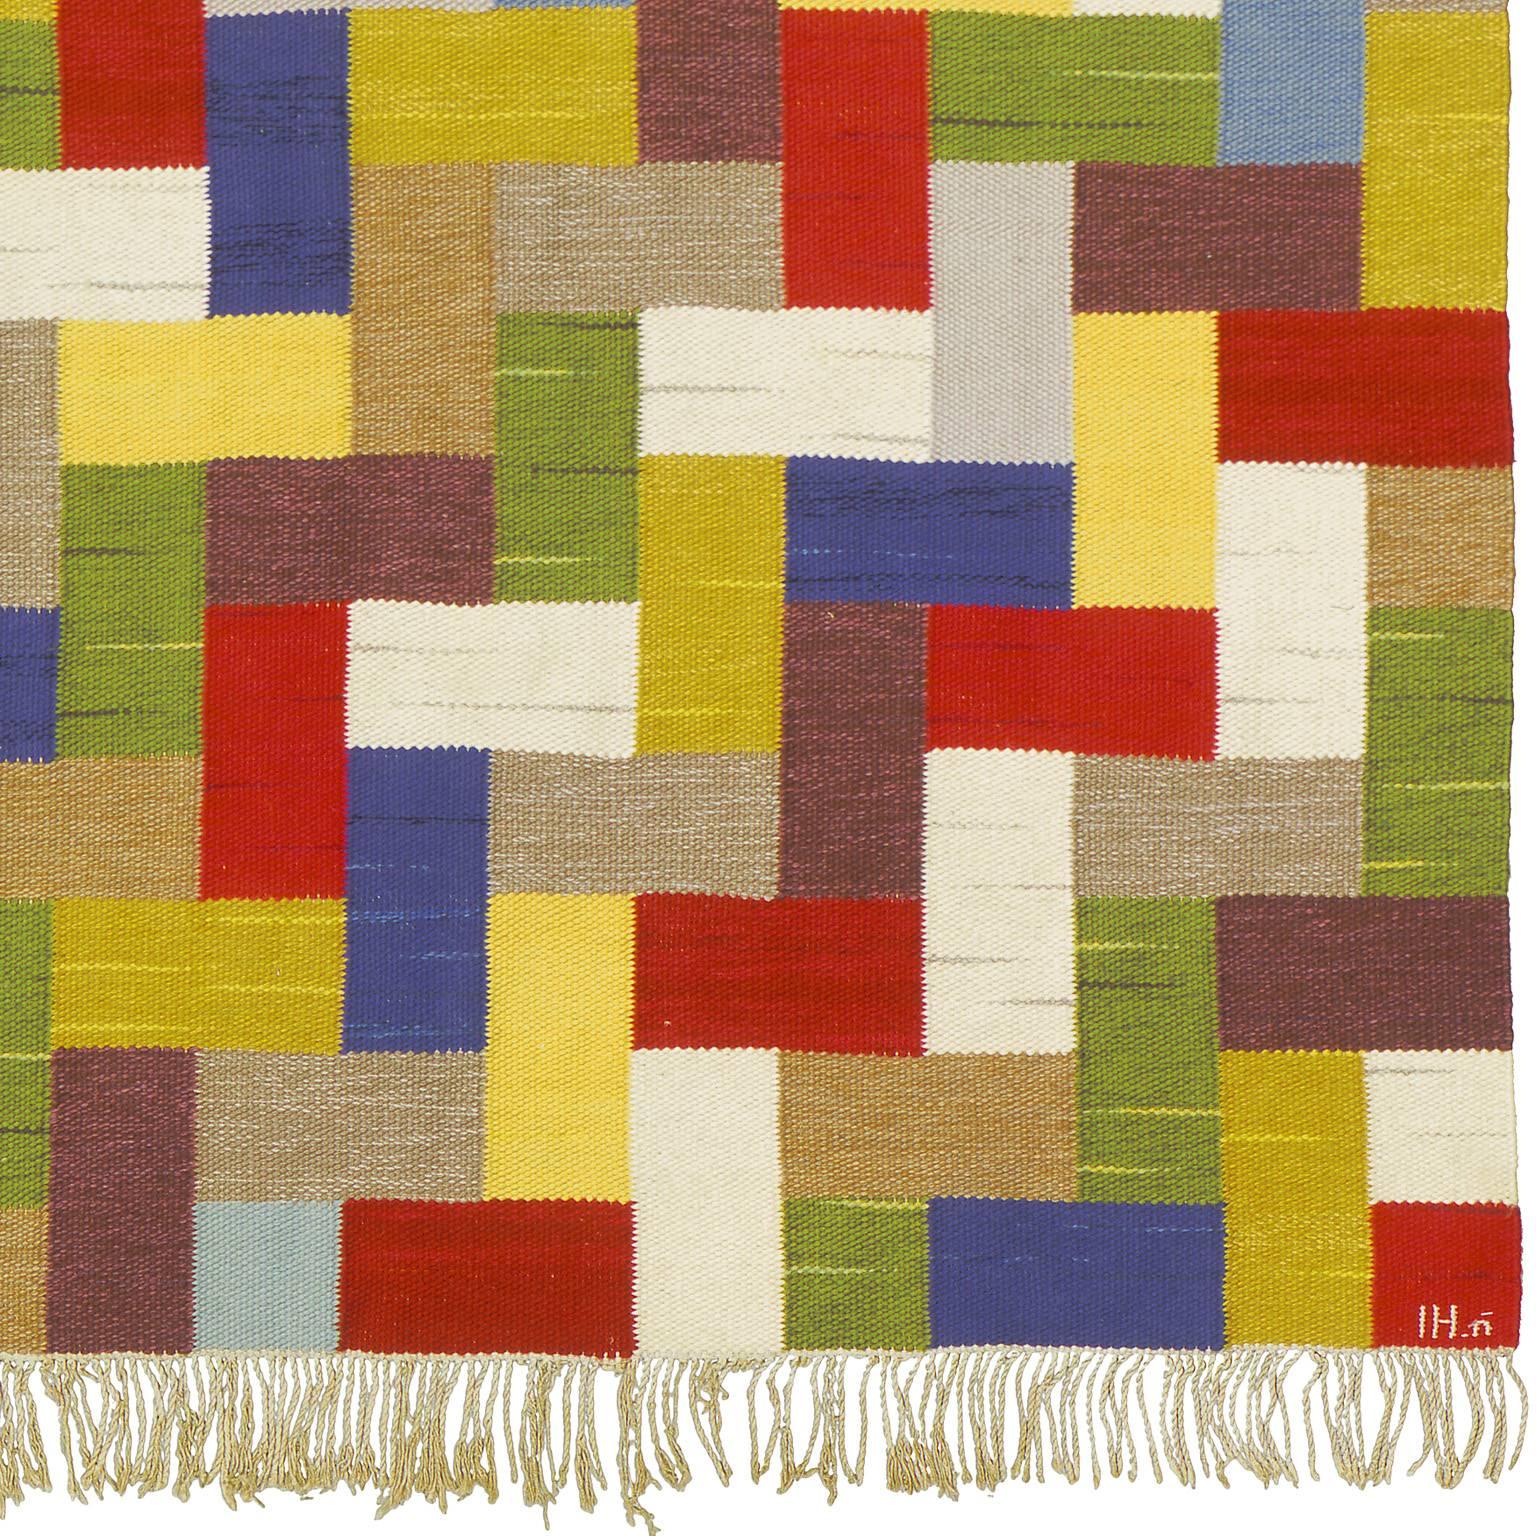 Mid-20th century Swedish flat-weave carpet by Ingrid Hellman-Knafve
Sweden, circa 1940-1950
Initialed: IH.n (Ingrid Hellman-Knafve)
Handwoven.